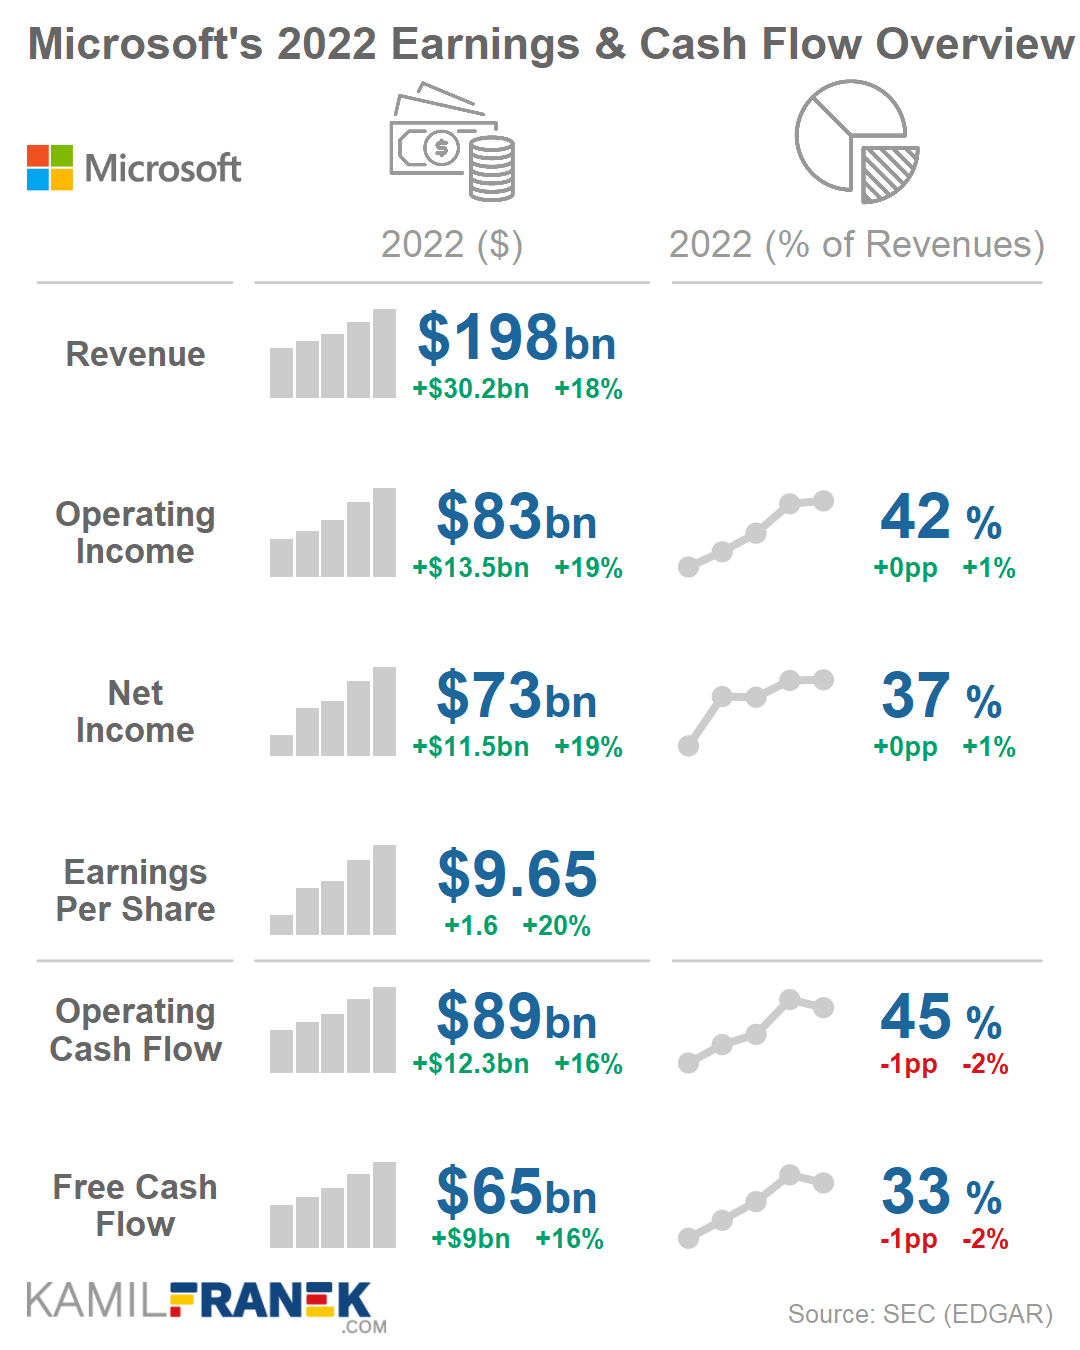 Microsoft's key income statement and cash flow metrics summary